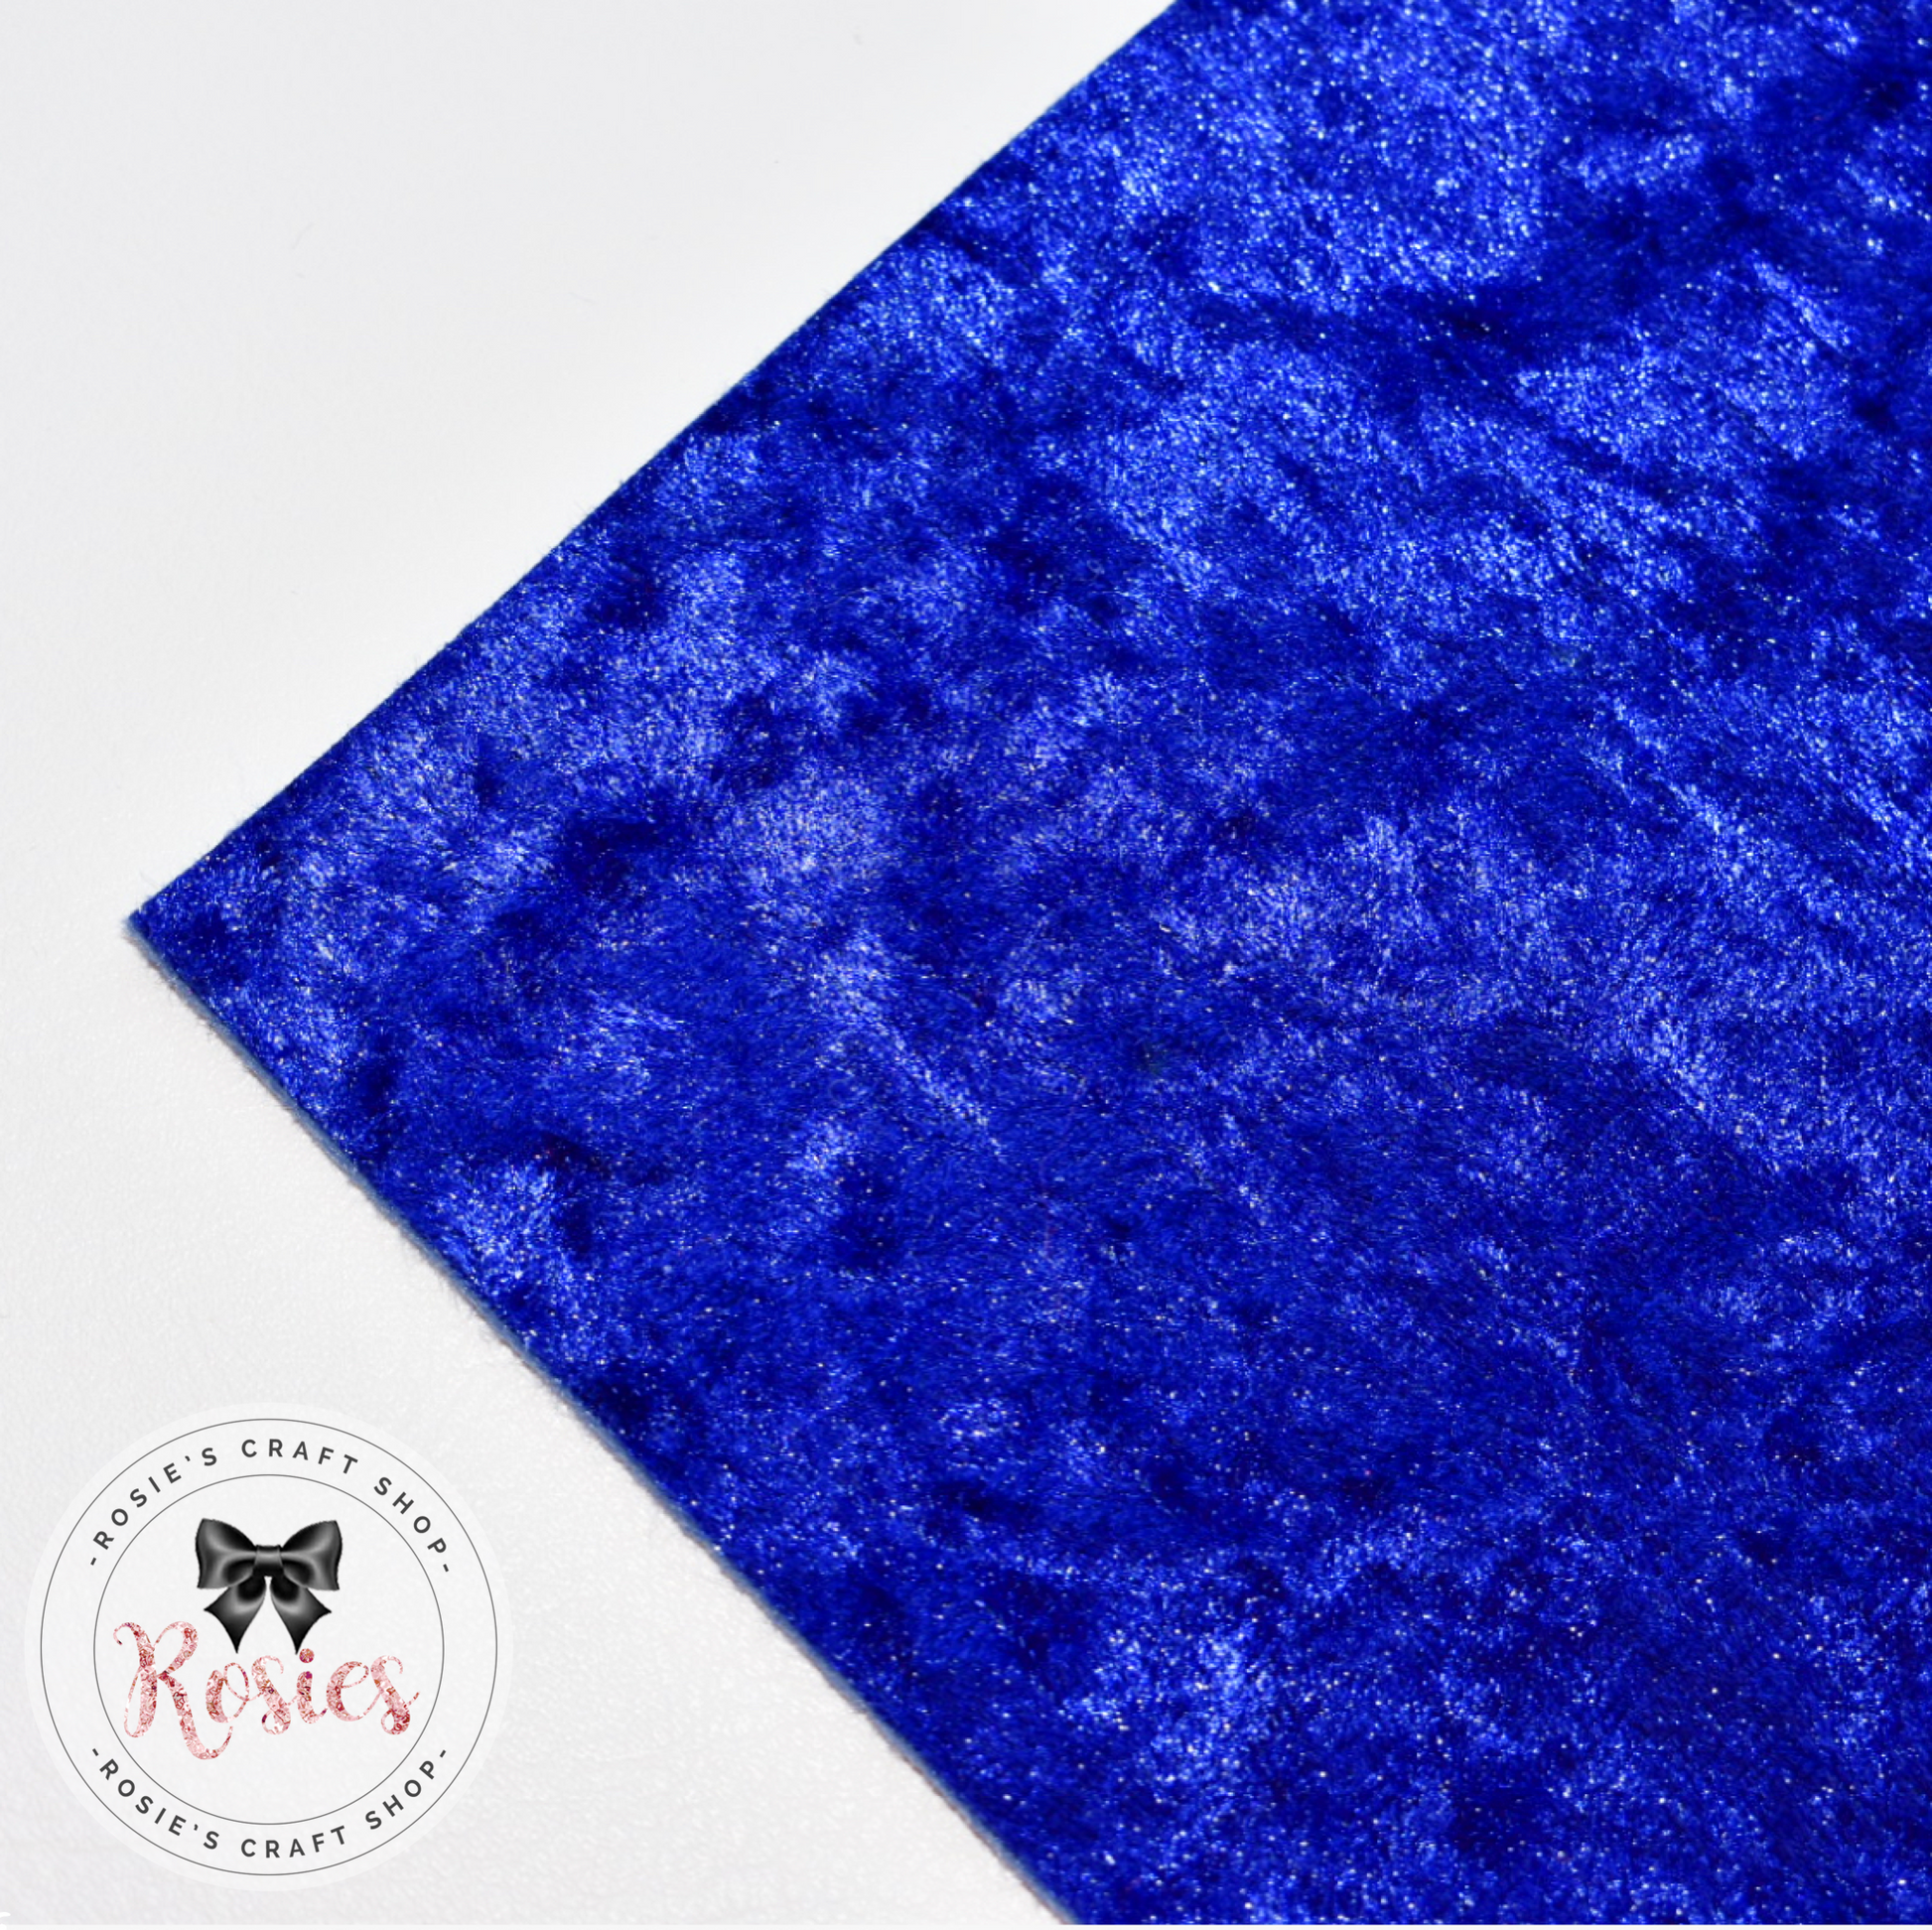 Royal Blue Crushed Velvet Fabric Felt - Rosie's Craft Shop Ltd